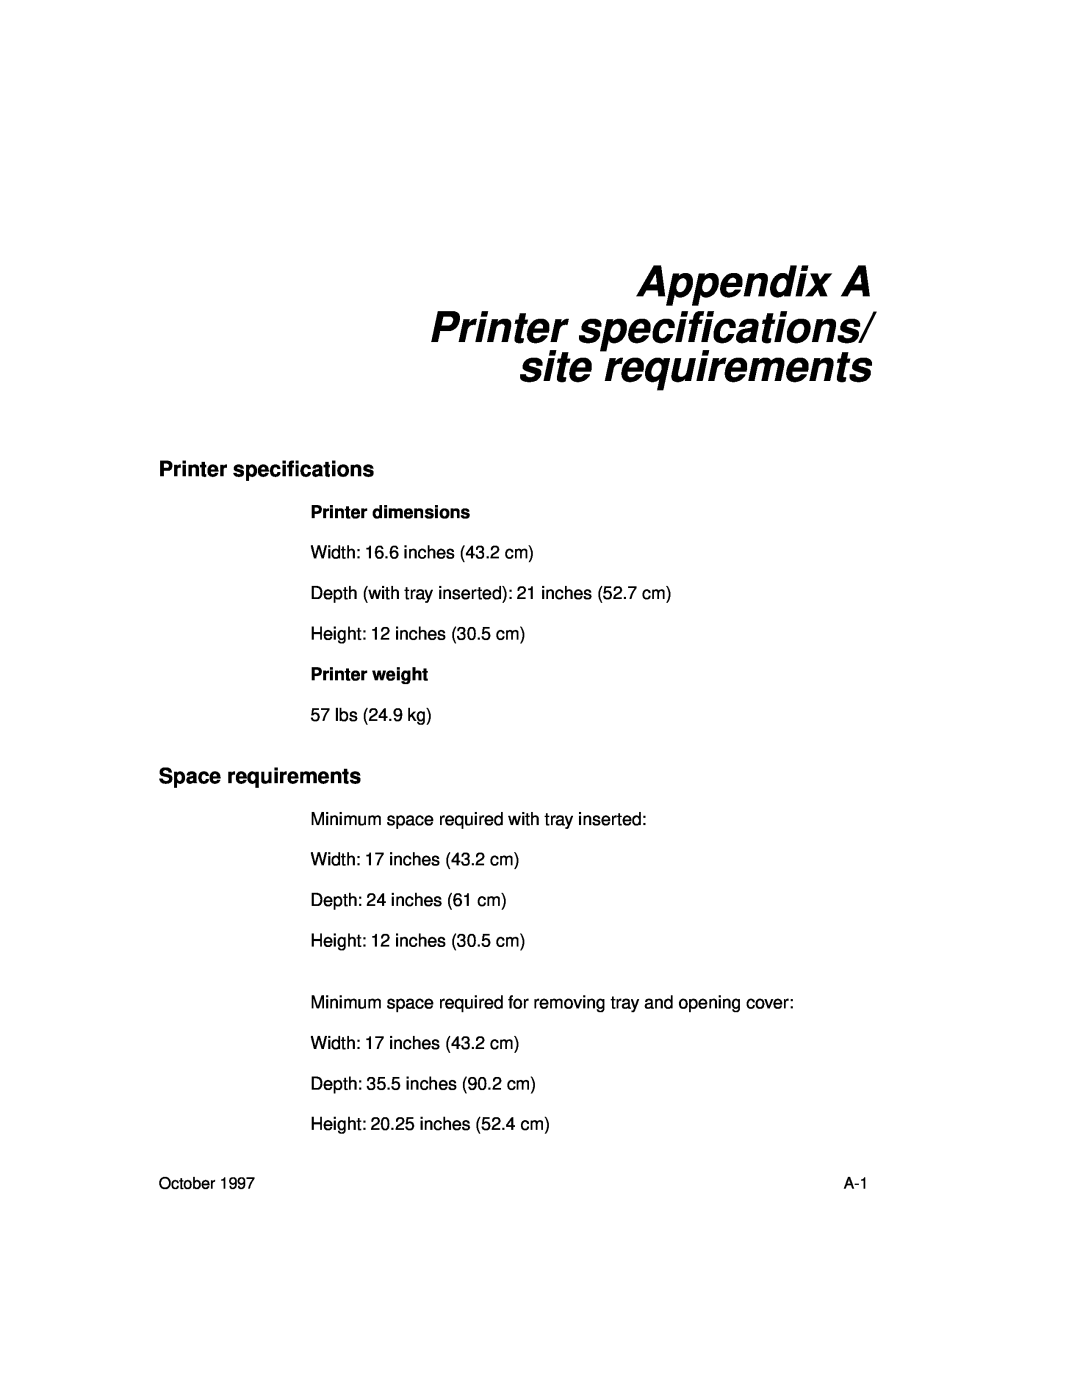 Kodak 8650 manual Appendix A, Printer speciﬁcations/ site requirements, Space requirements 